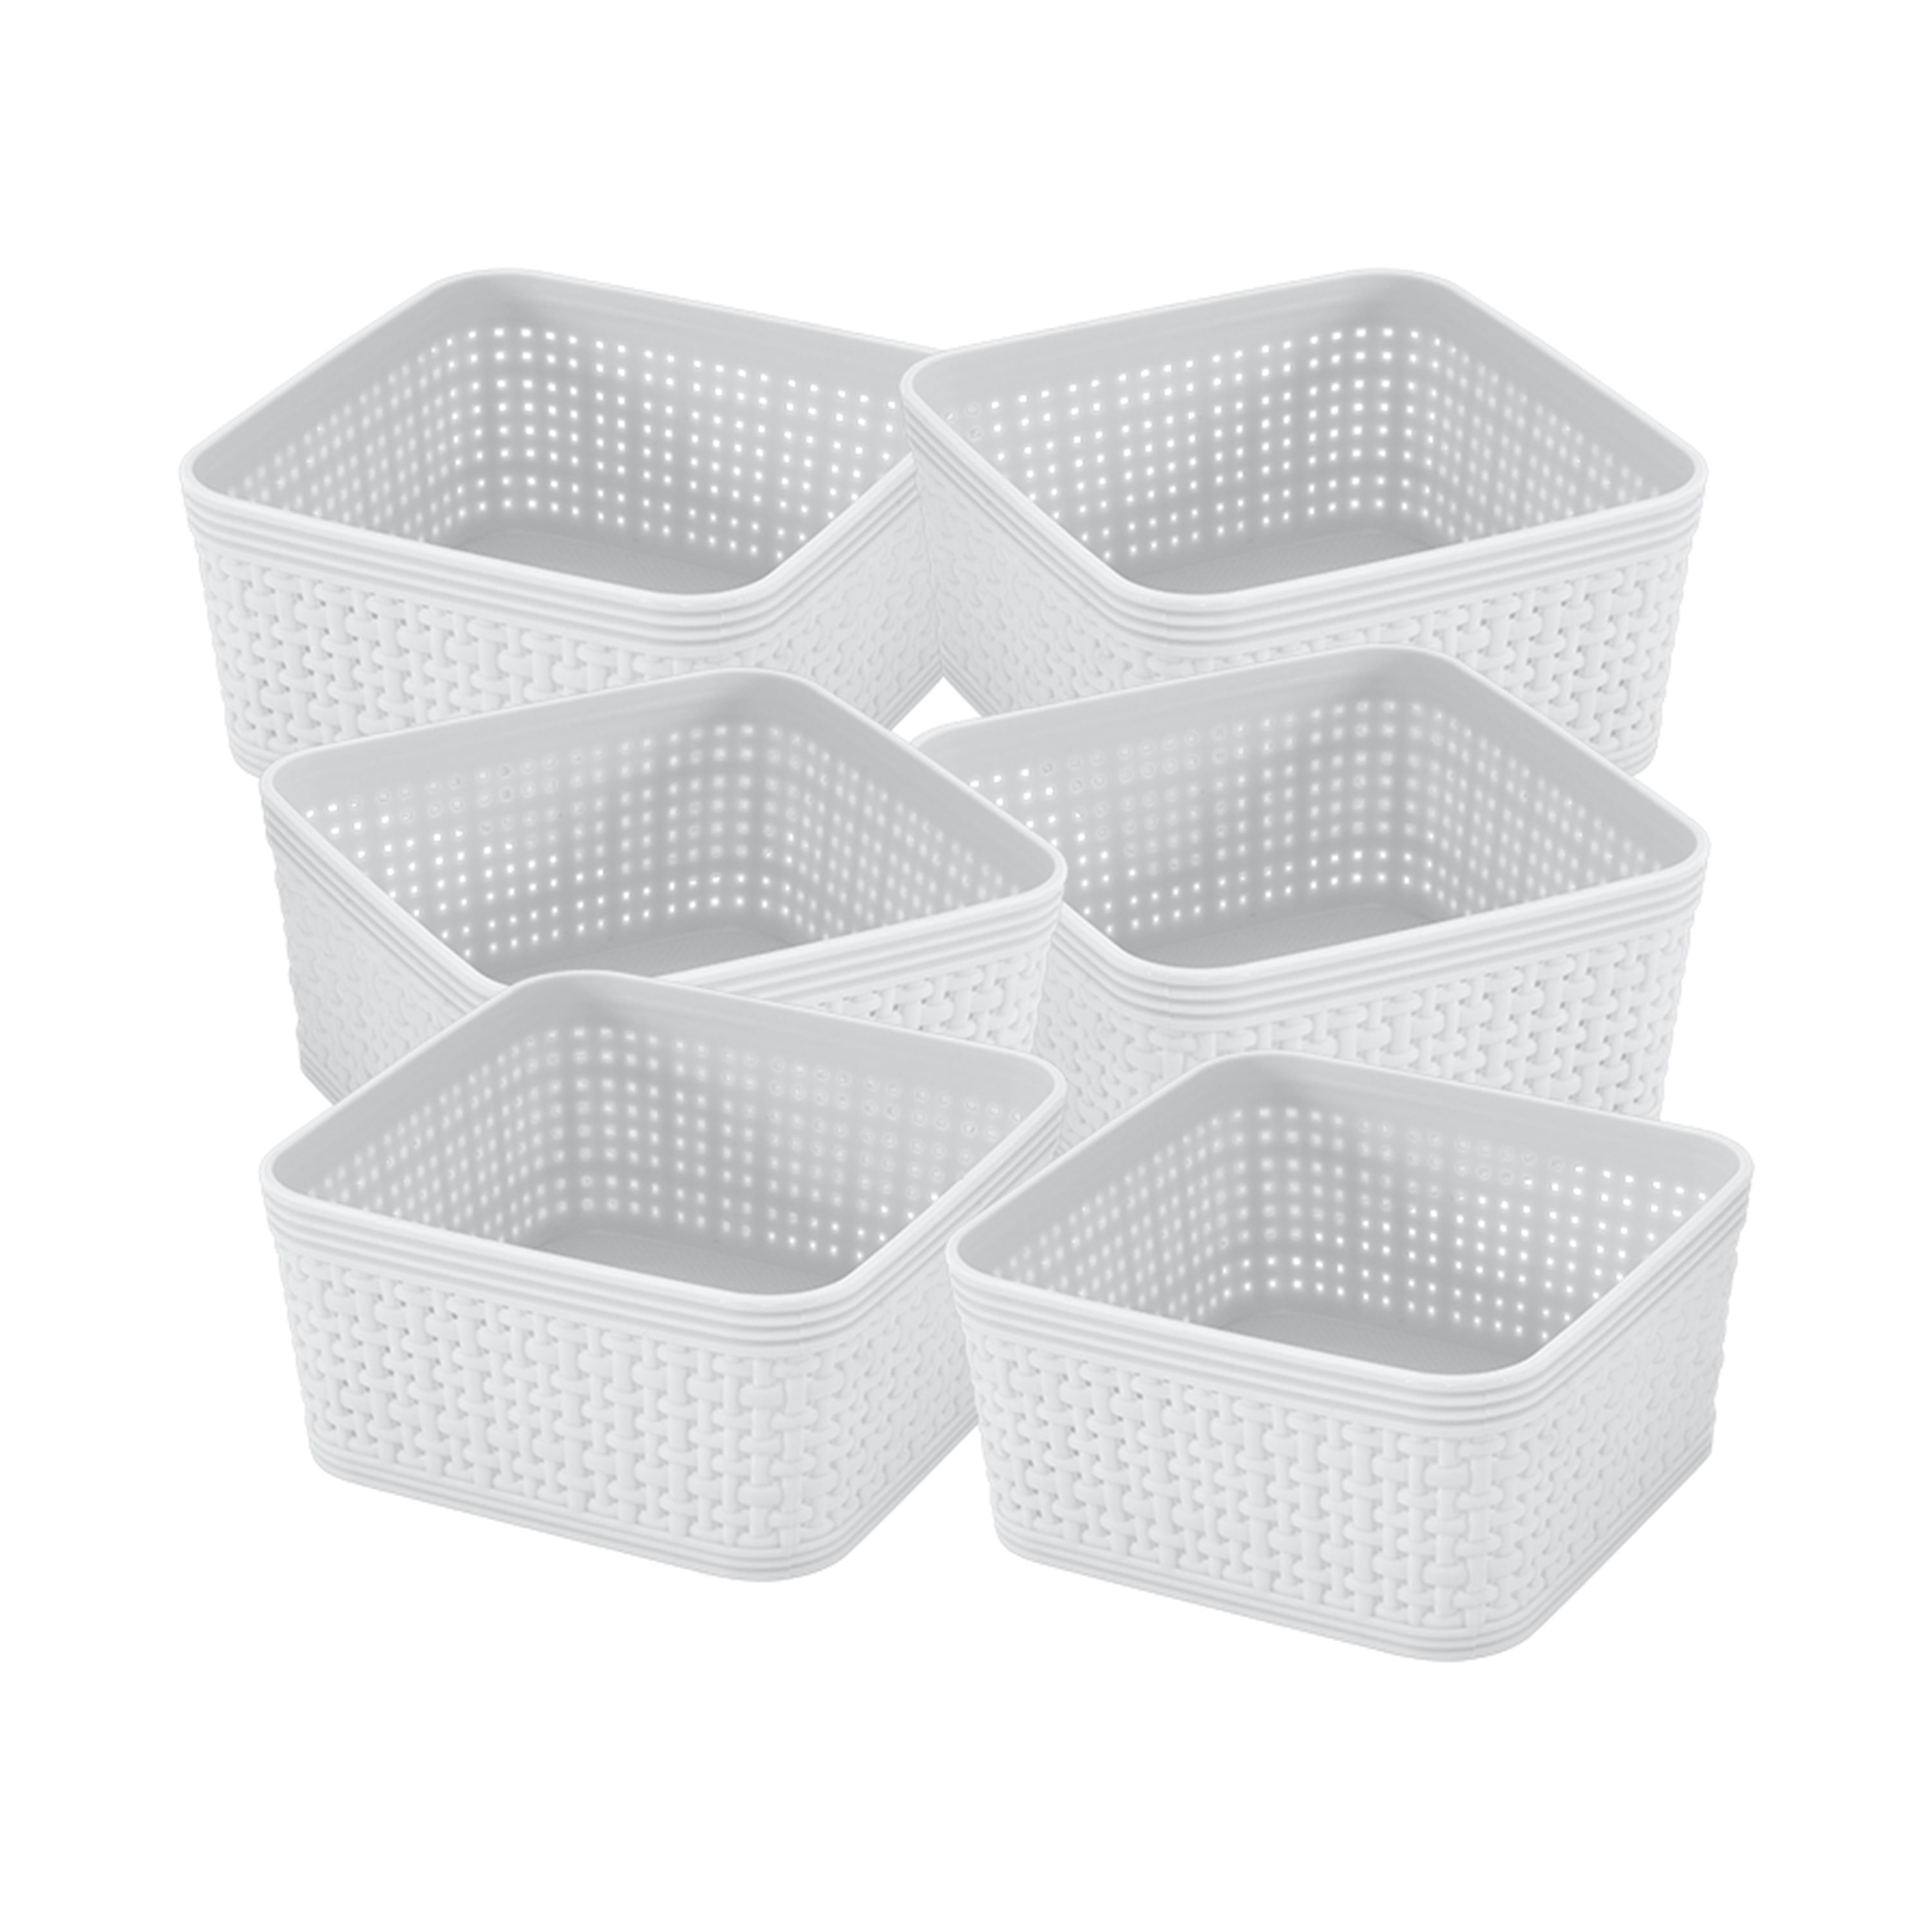 Idomy 6-Pack Plastic Storage Baskets/Bins, Rectangle